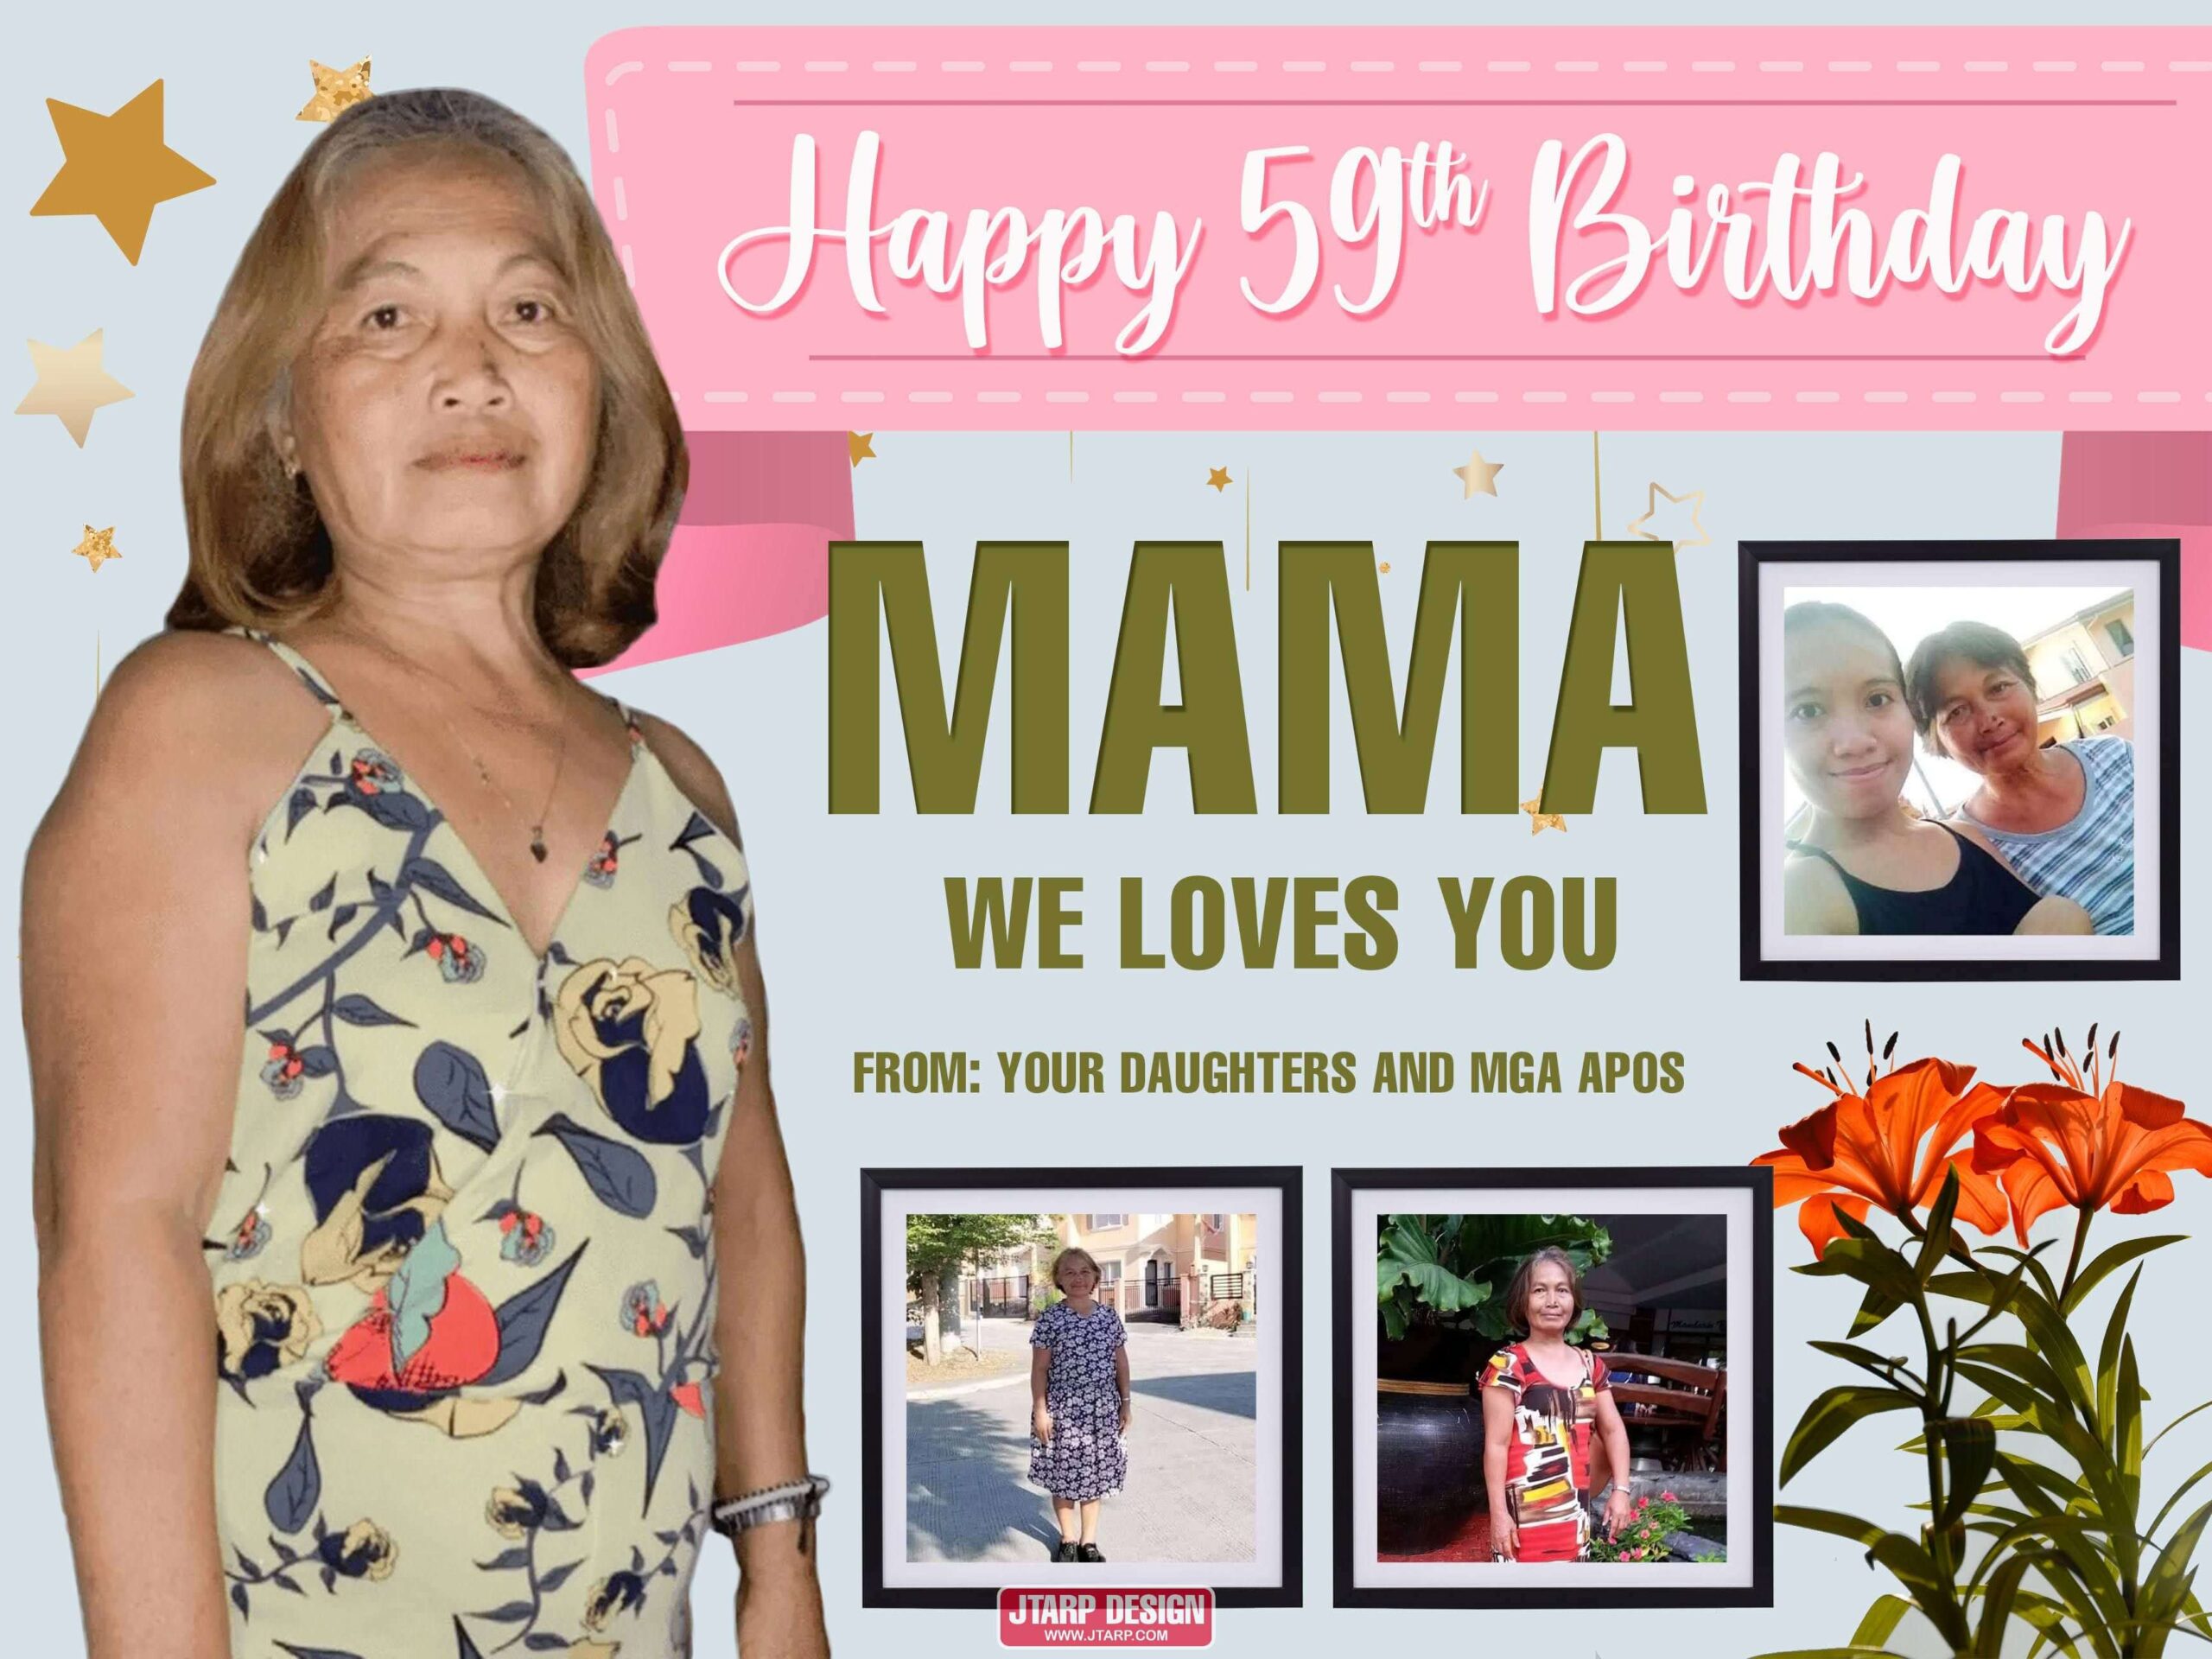 2x3 happy 59th birthday Mama